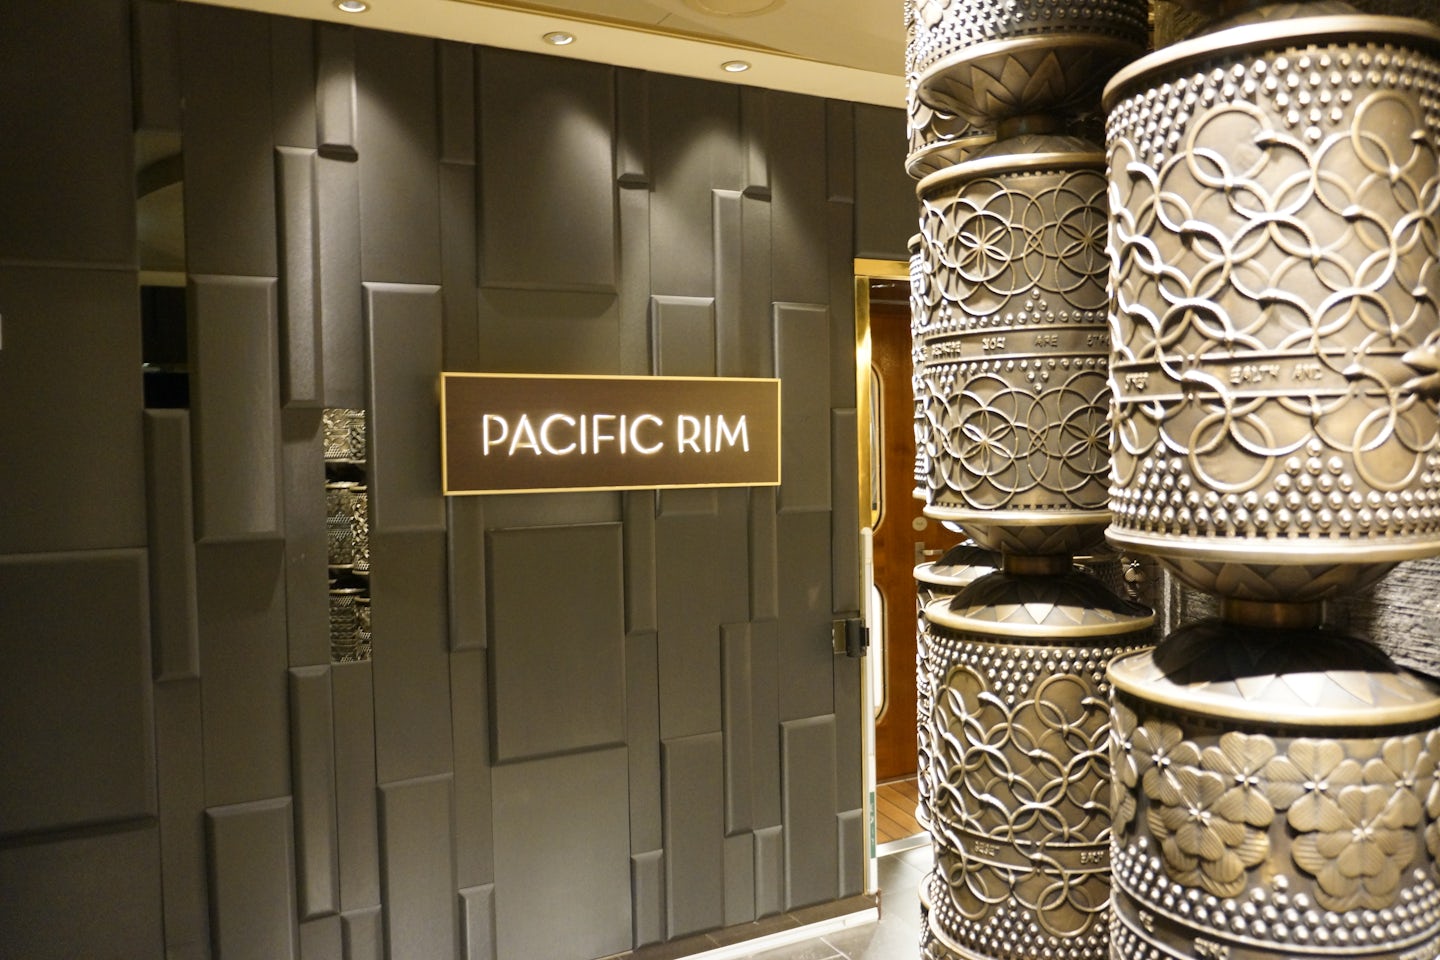 Pacific Rim entrance